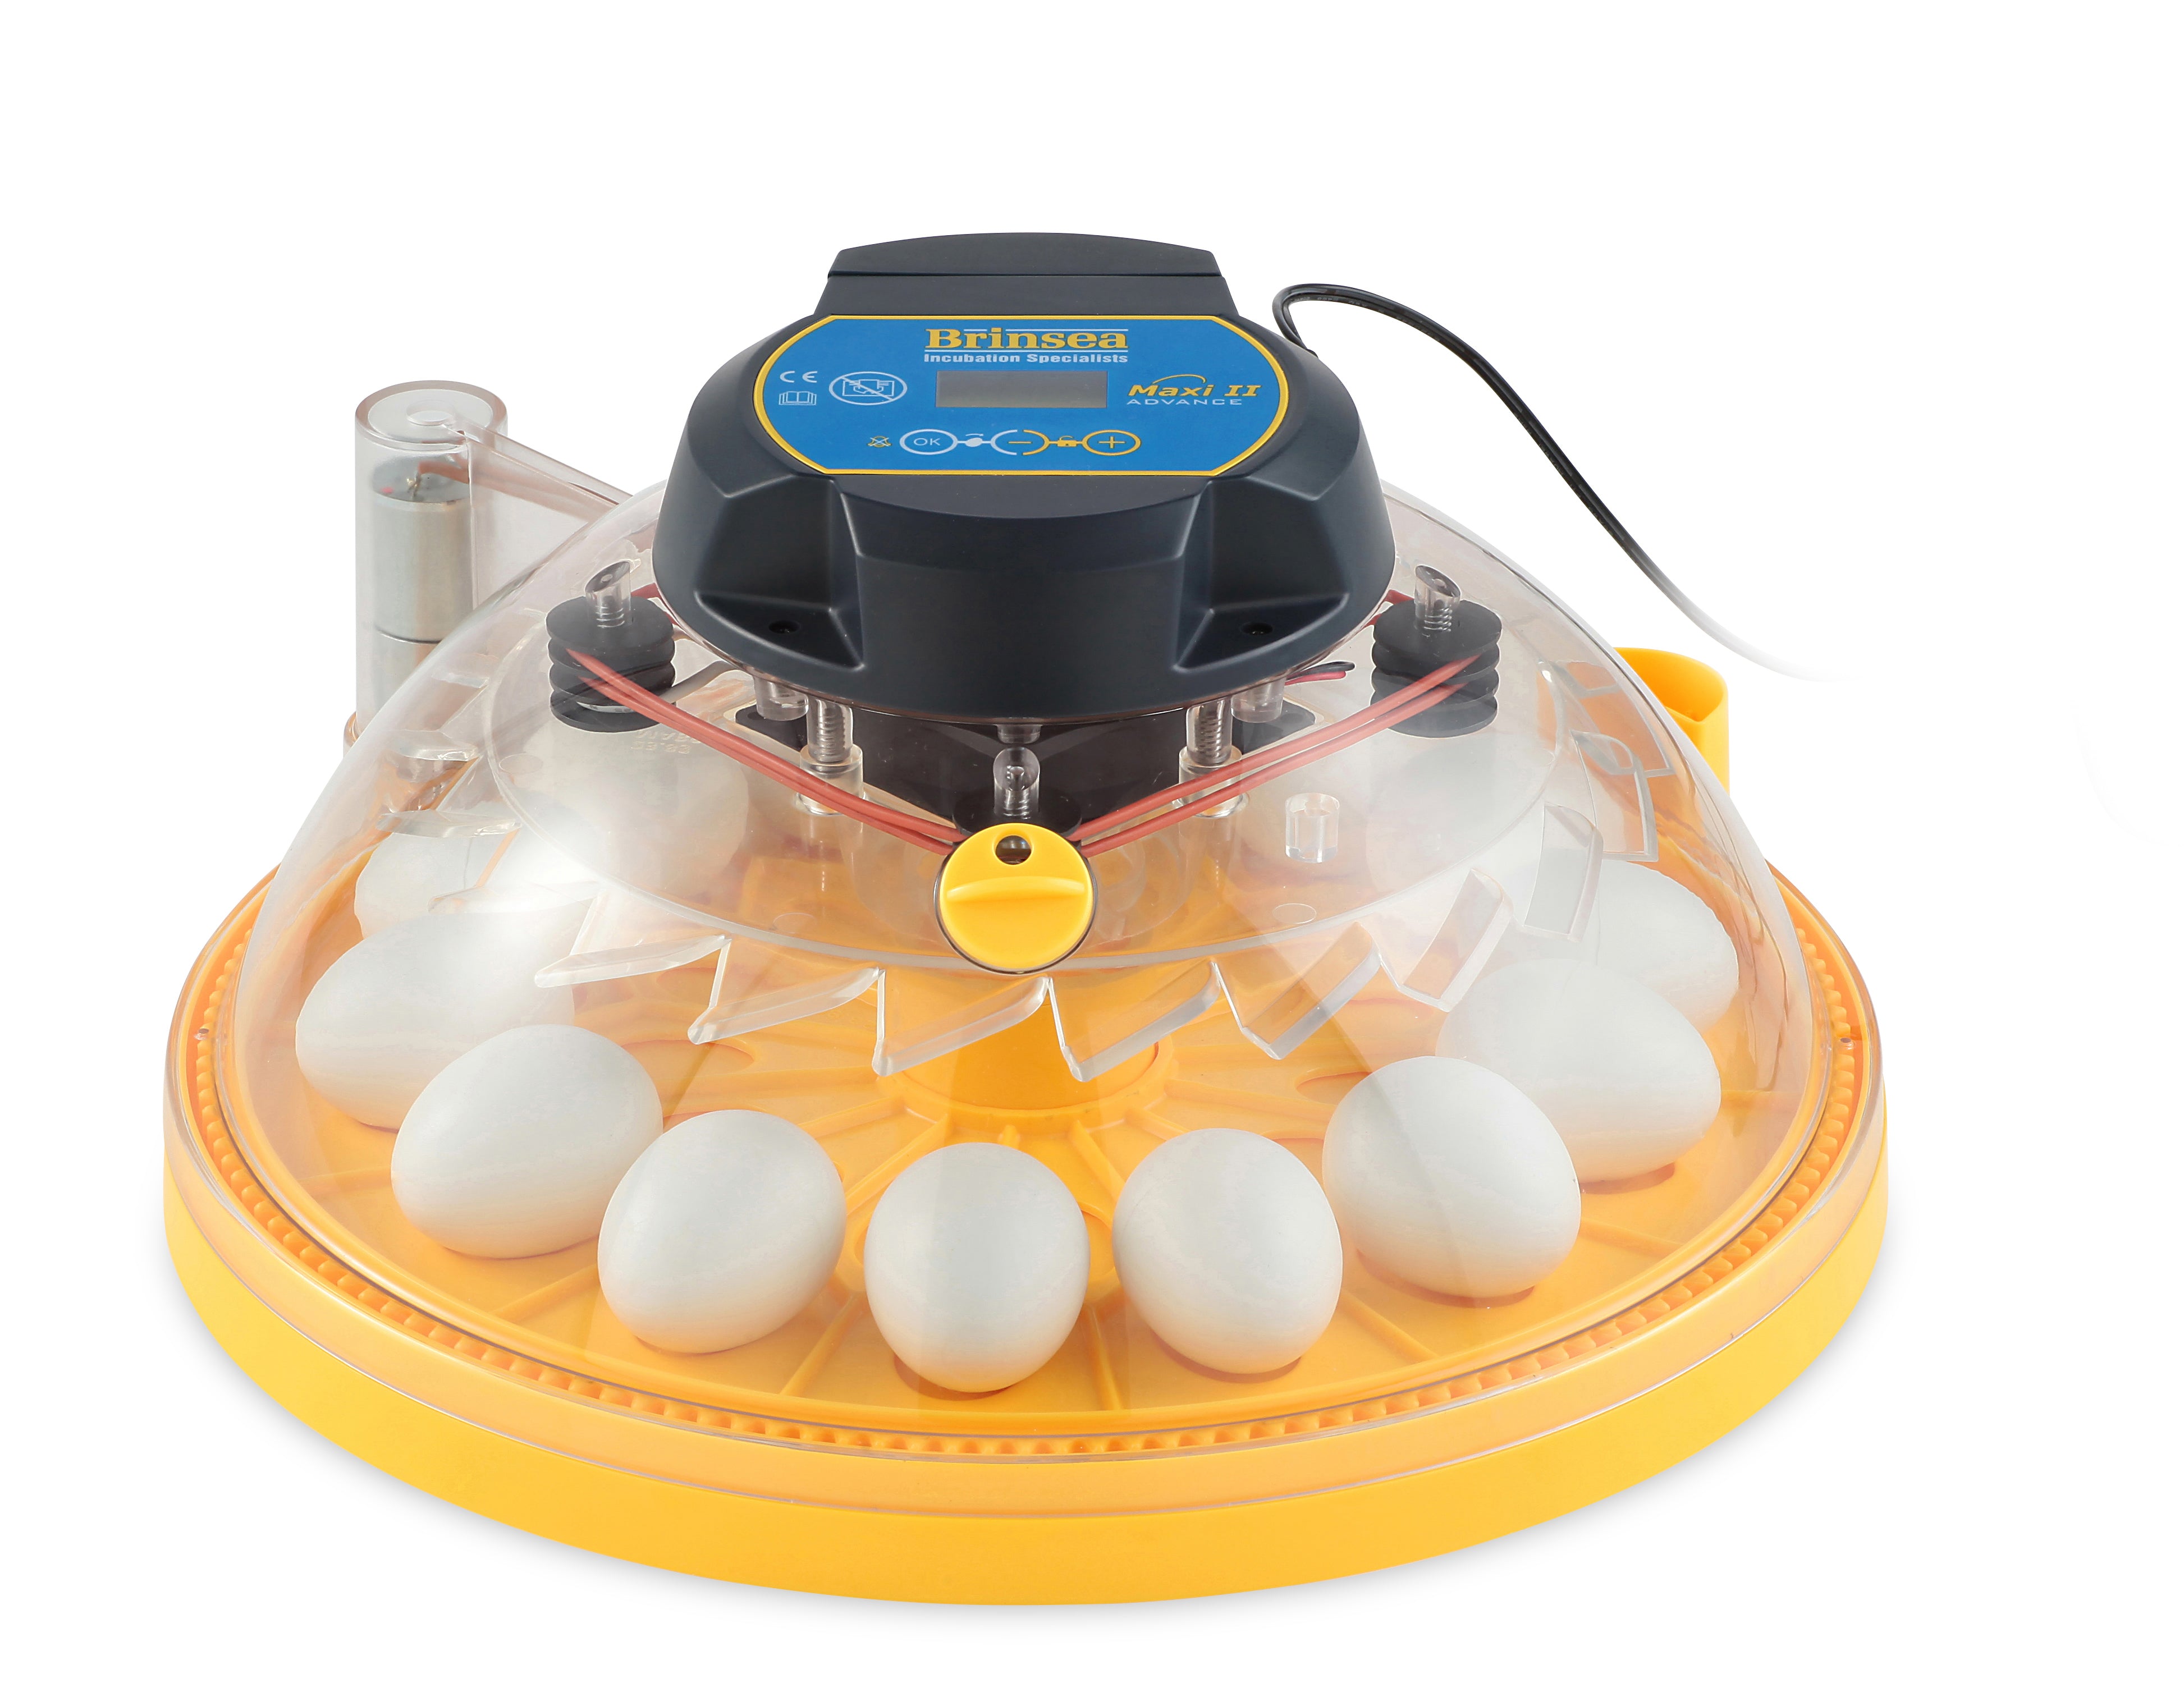 Egg-Incubator "Brinsea Maxi Advance" with fully-automatic egg-turning